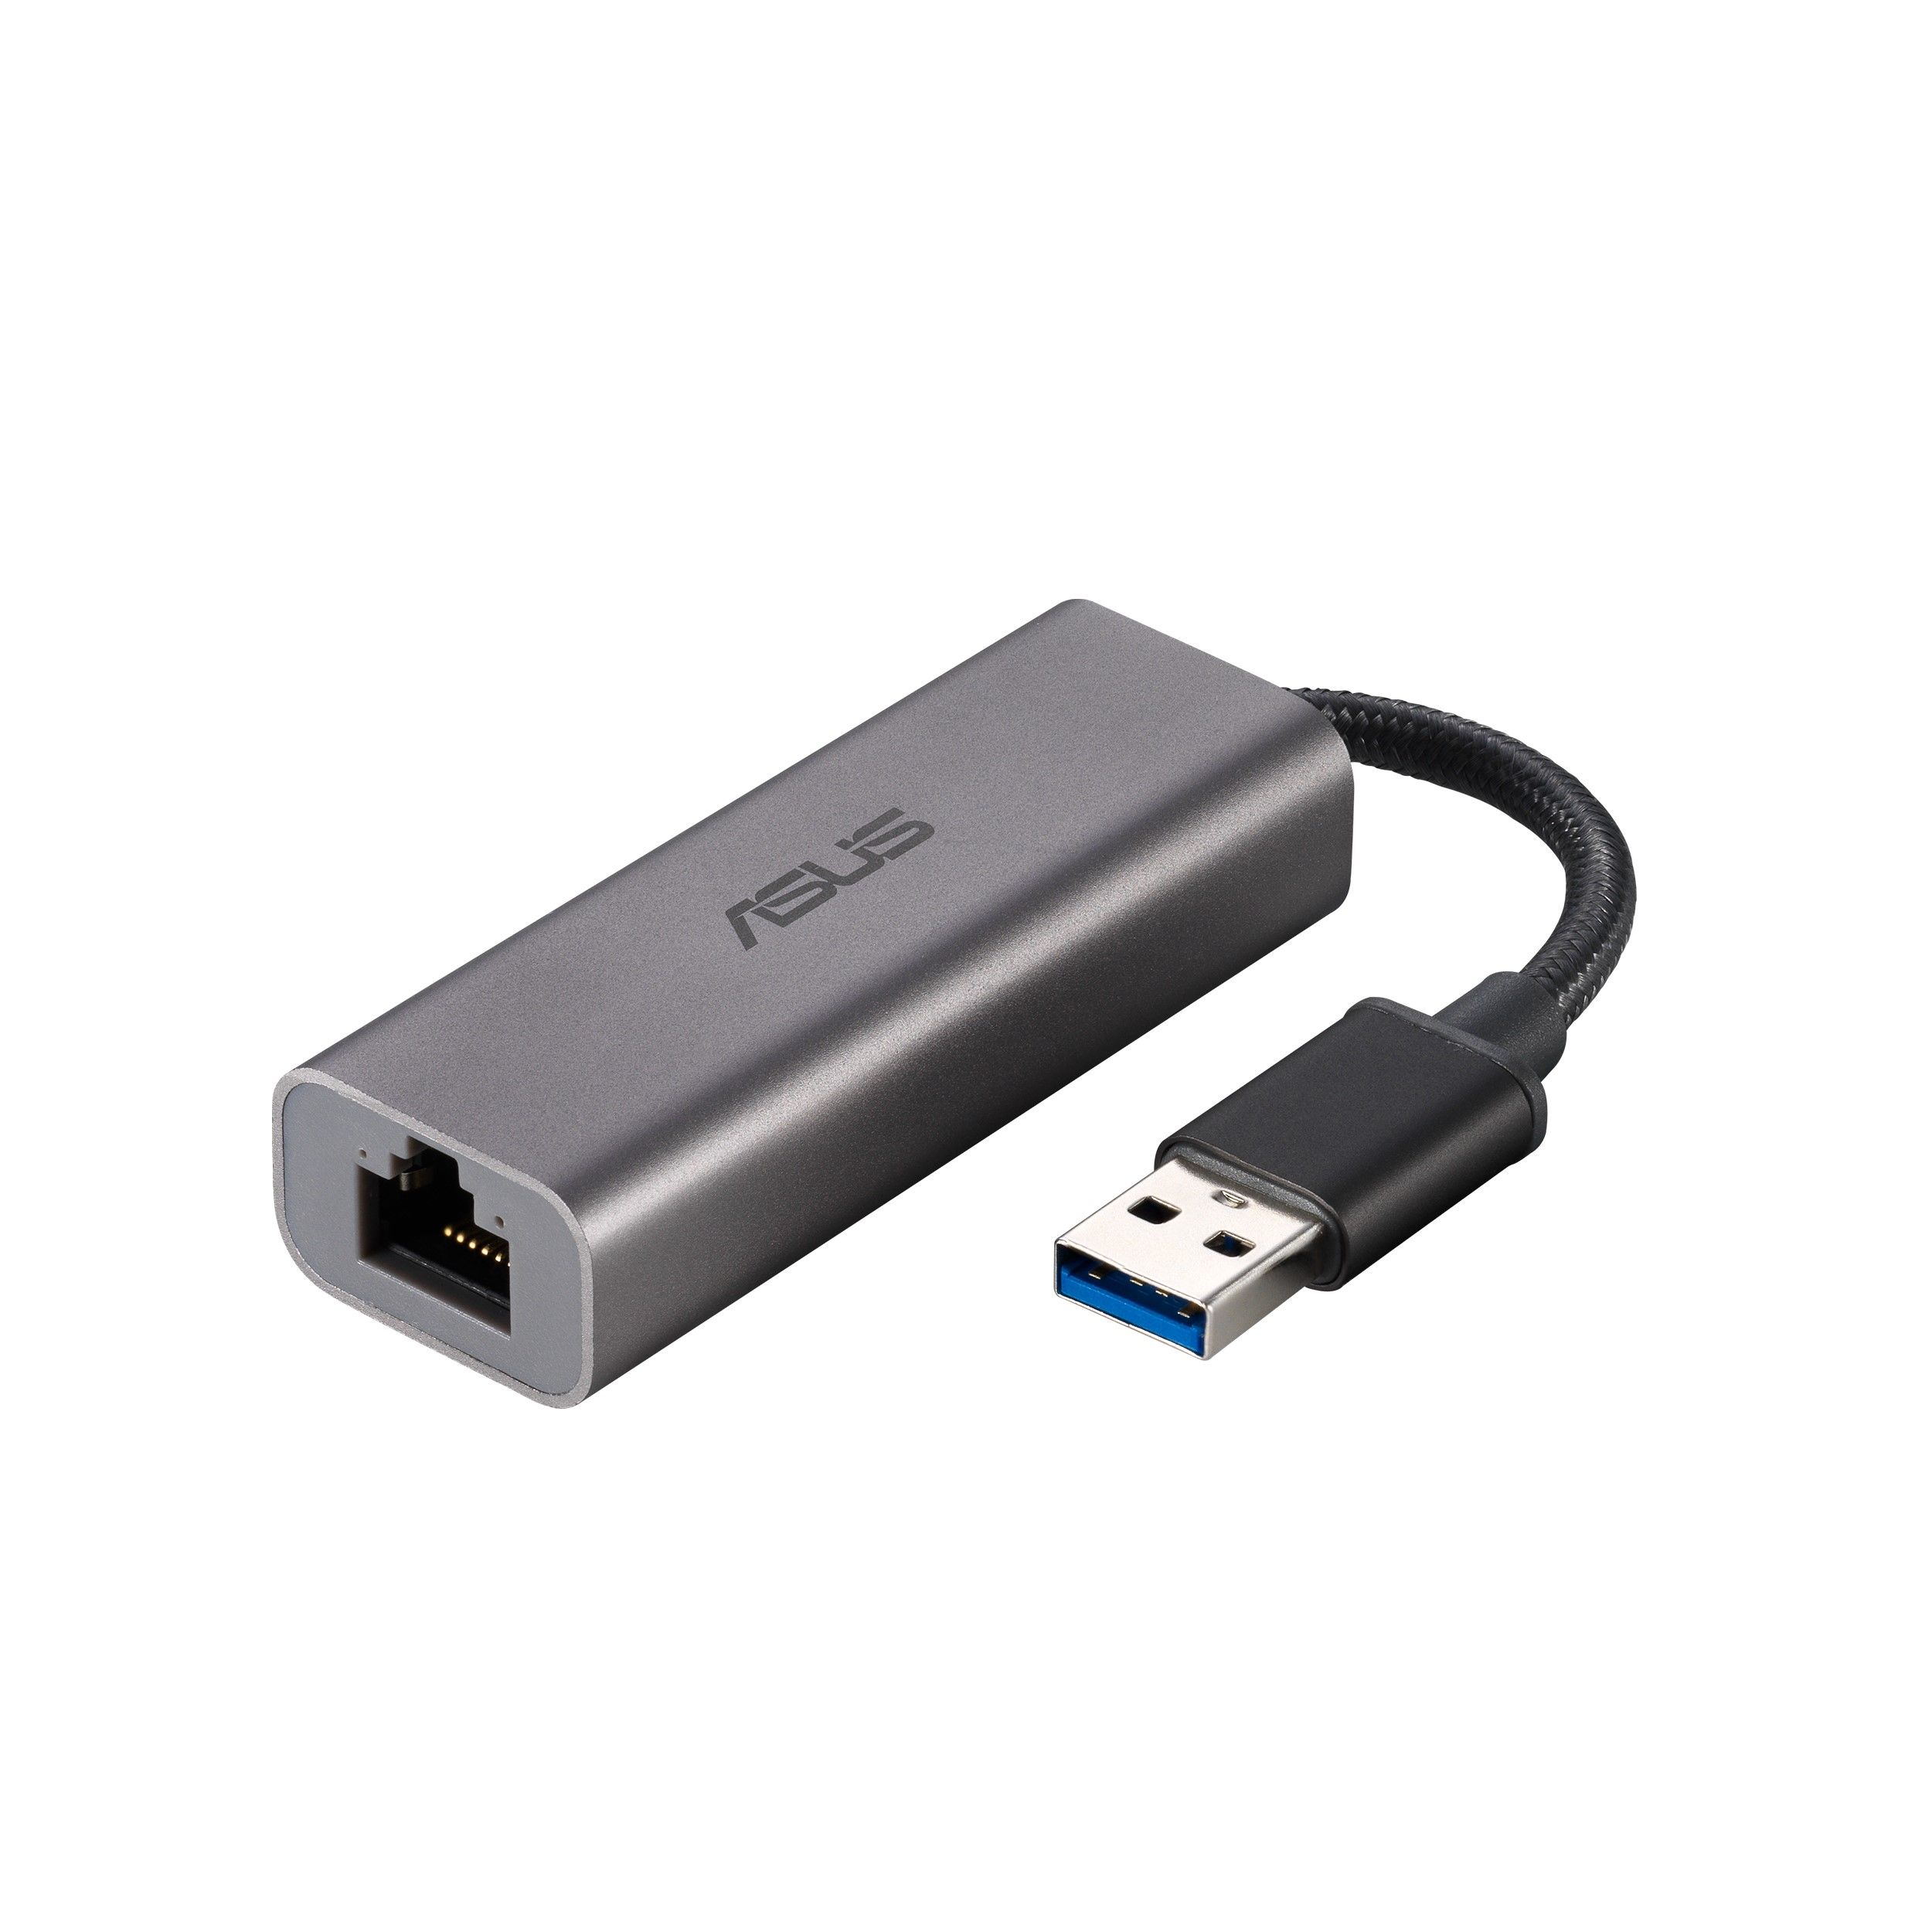 ASUS USB-C2500 Ethernet Adapter, Input USB 3.2 Gen1 Type-A, Output 100/1000/2500 Mbps RJ45 Port._1